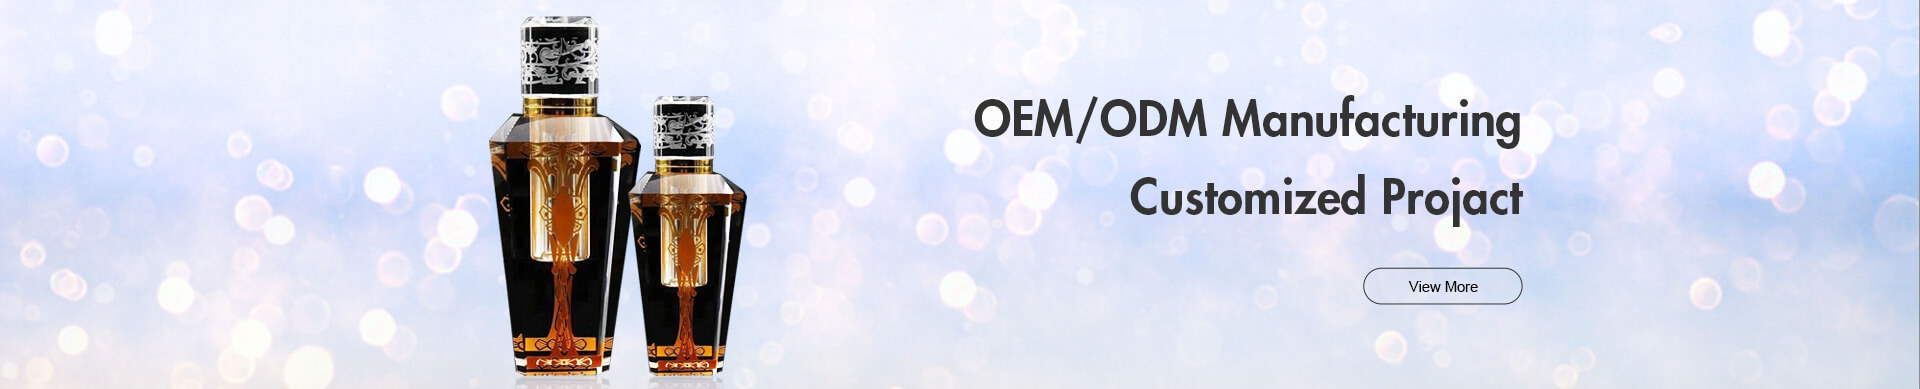 OEM/ODM Manufacturing